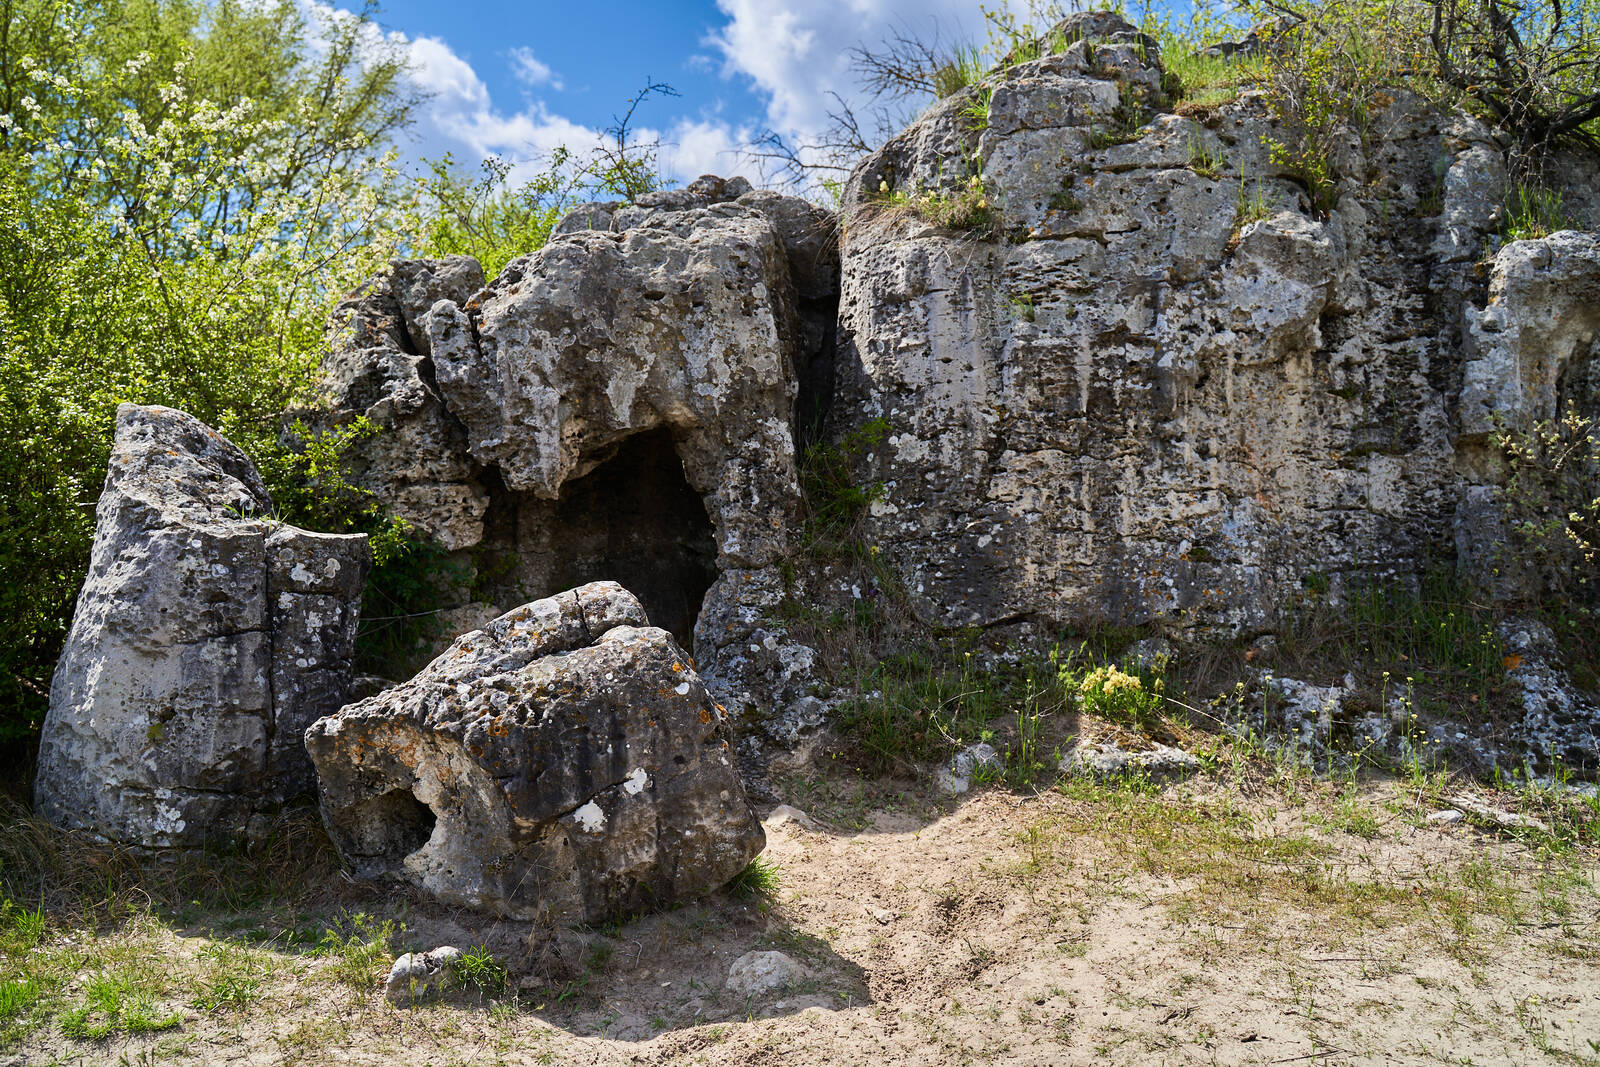 Image of Pobiti Kamani (The Stone forest) by Rostikslav Nepomnyaschiy